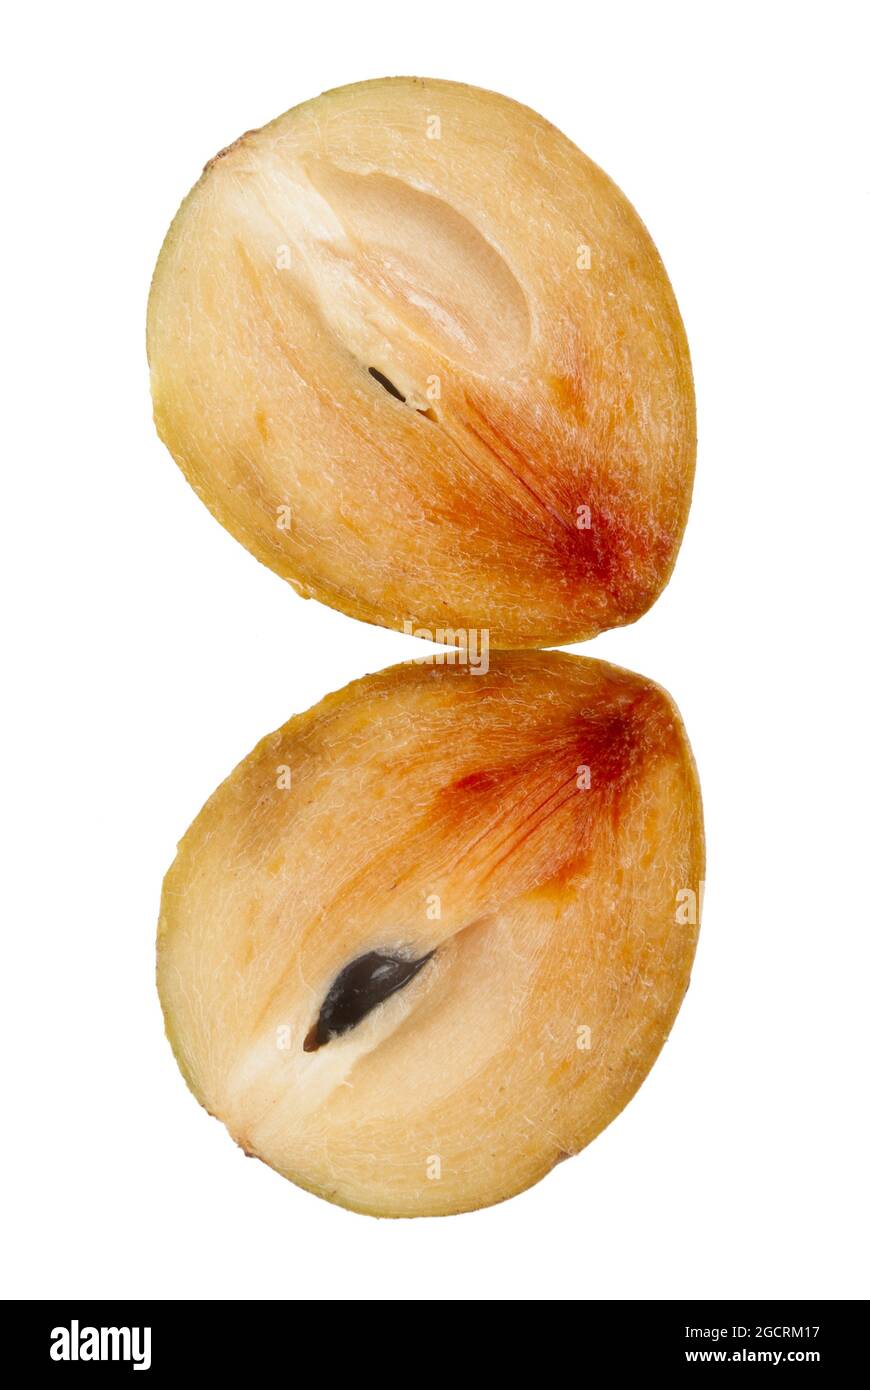 sapodilla plum with cut isolated on white Stock Photo